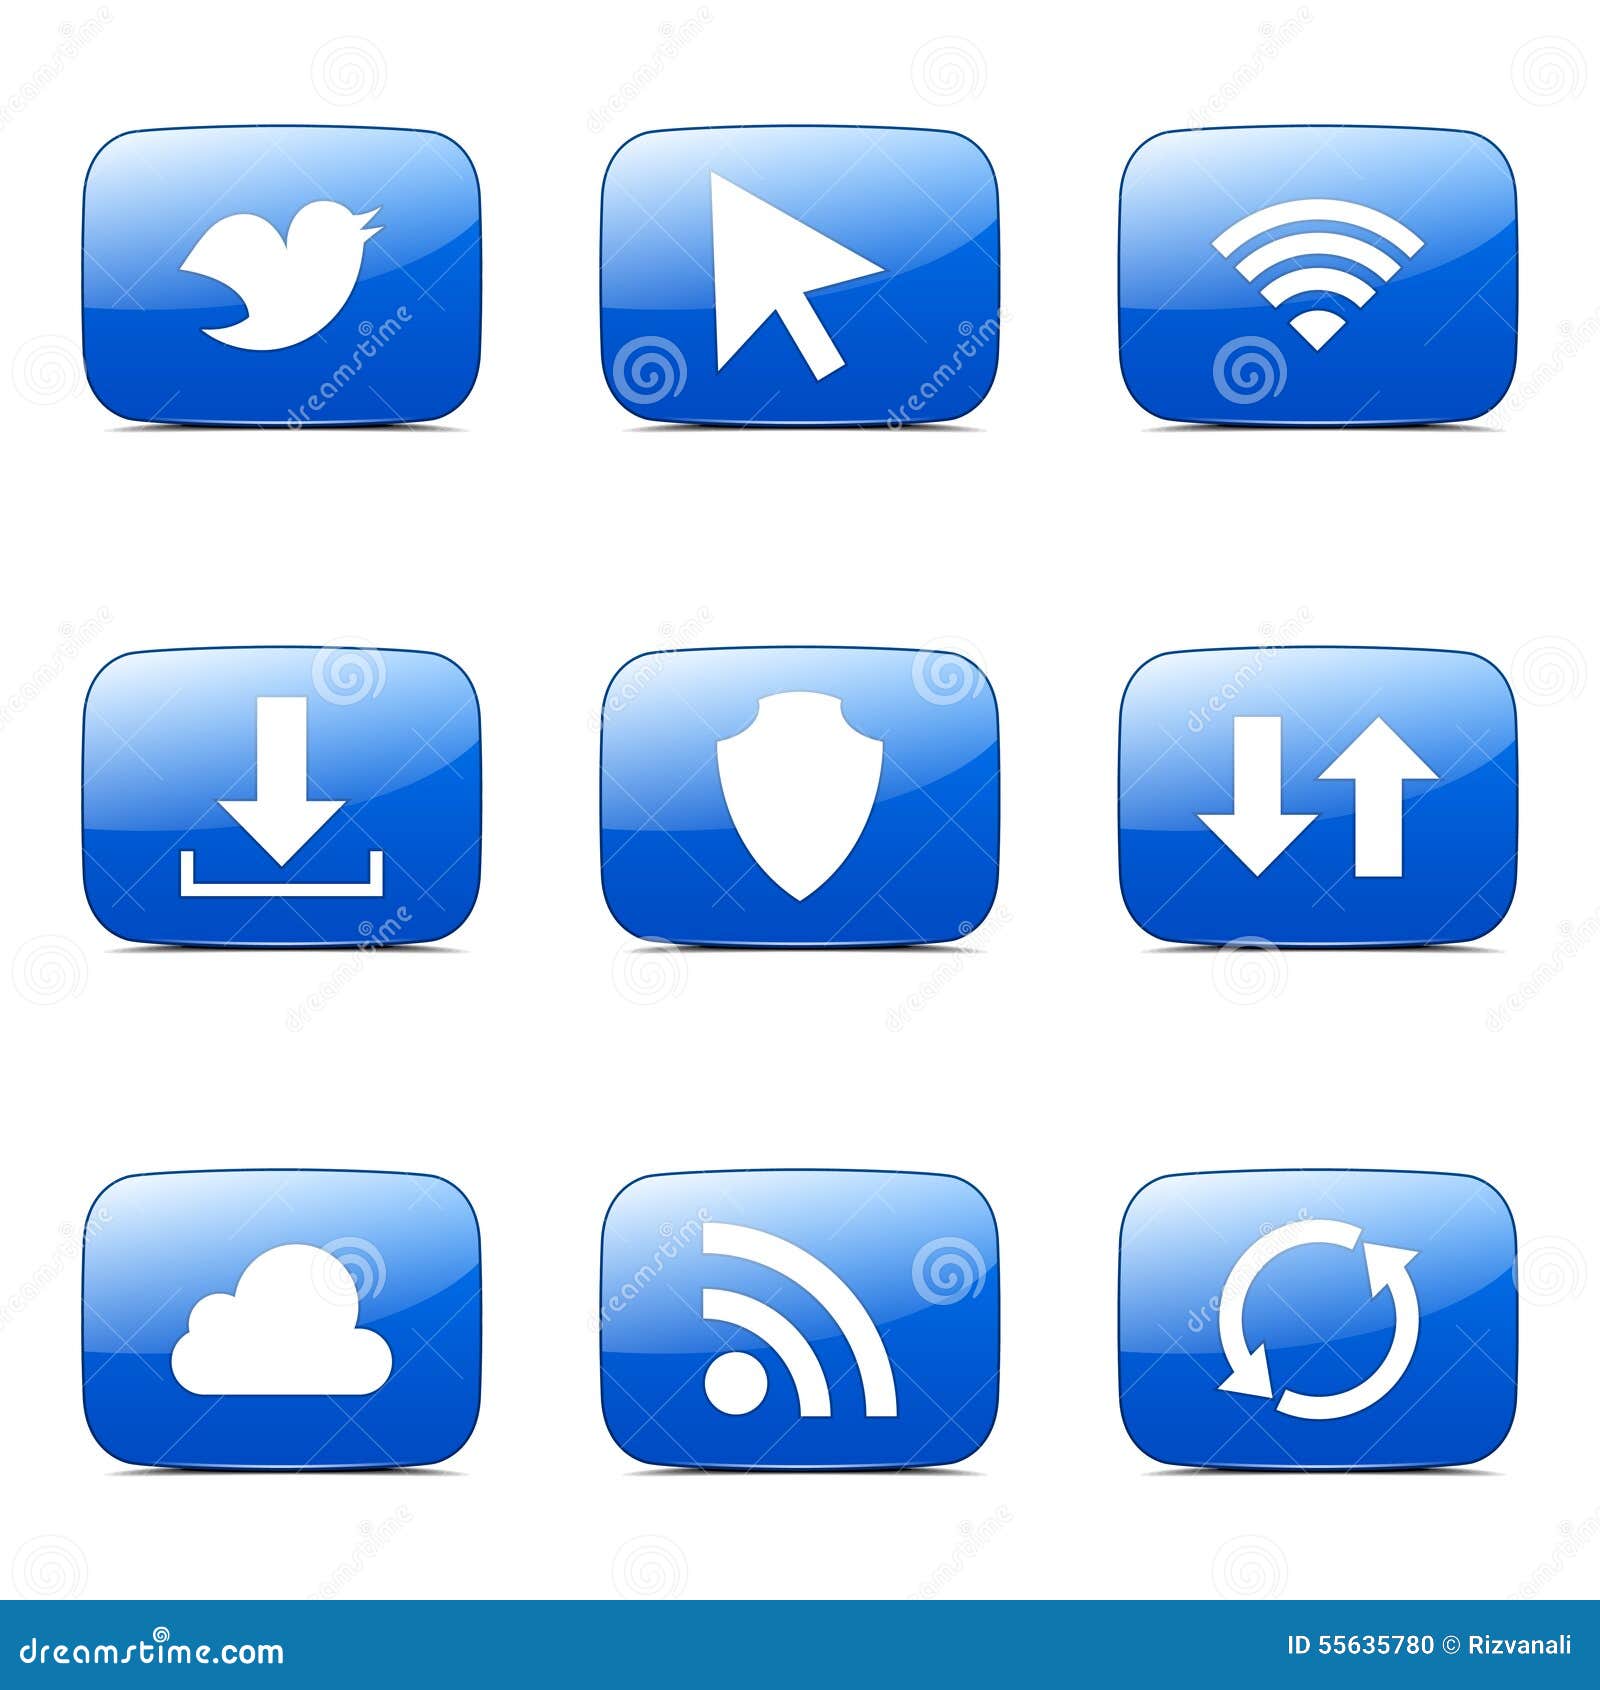 web internet social square  blue icon